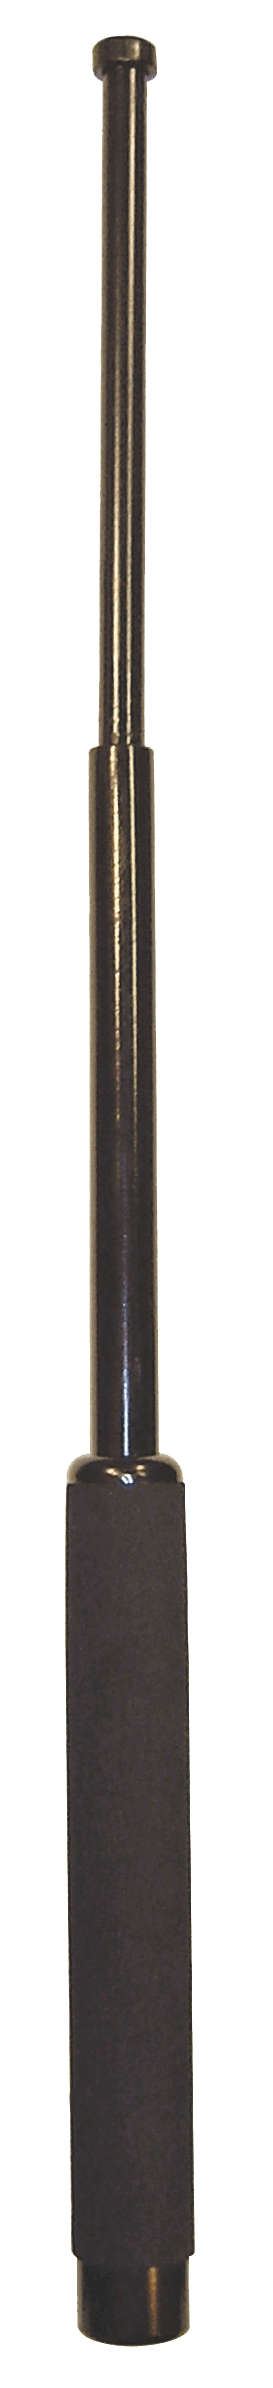 PSP NS21F Expandable Collapsible Baton 21″ 1.5 lbs Black Foam Handle